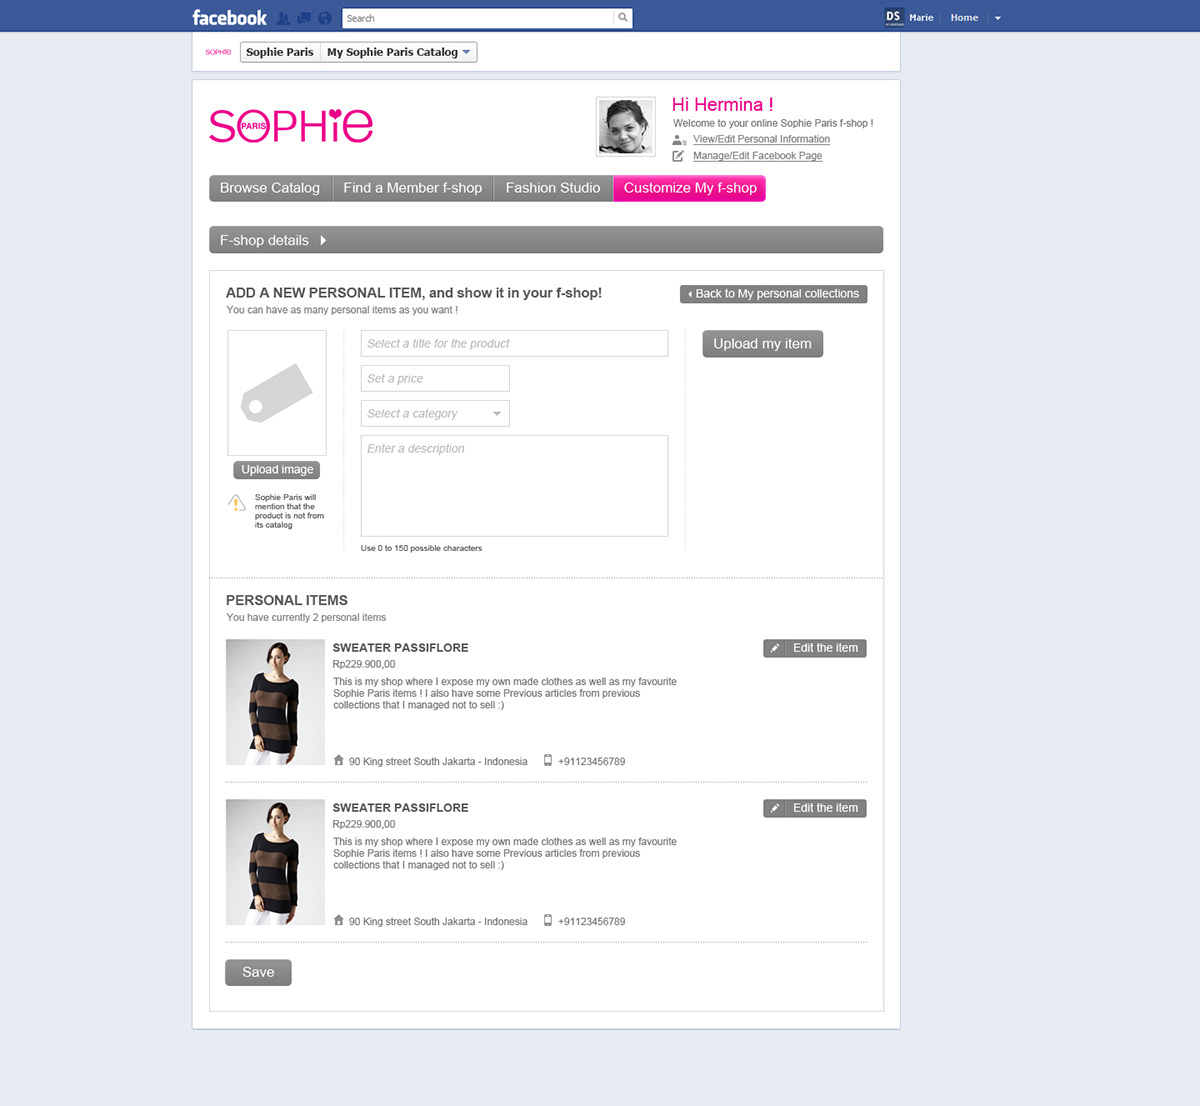 KRDS Sophie Paris social media Facebook Application